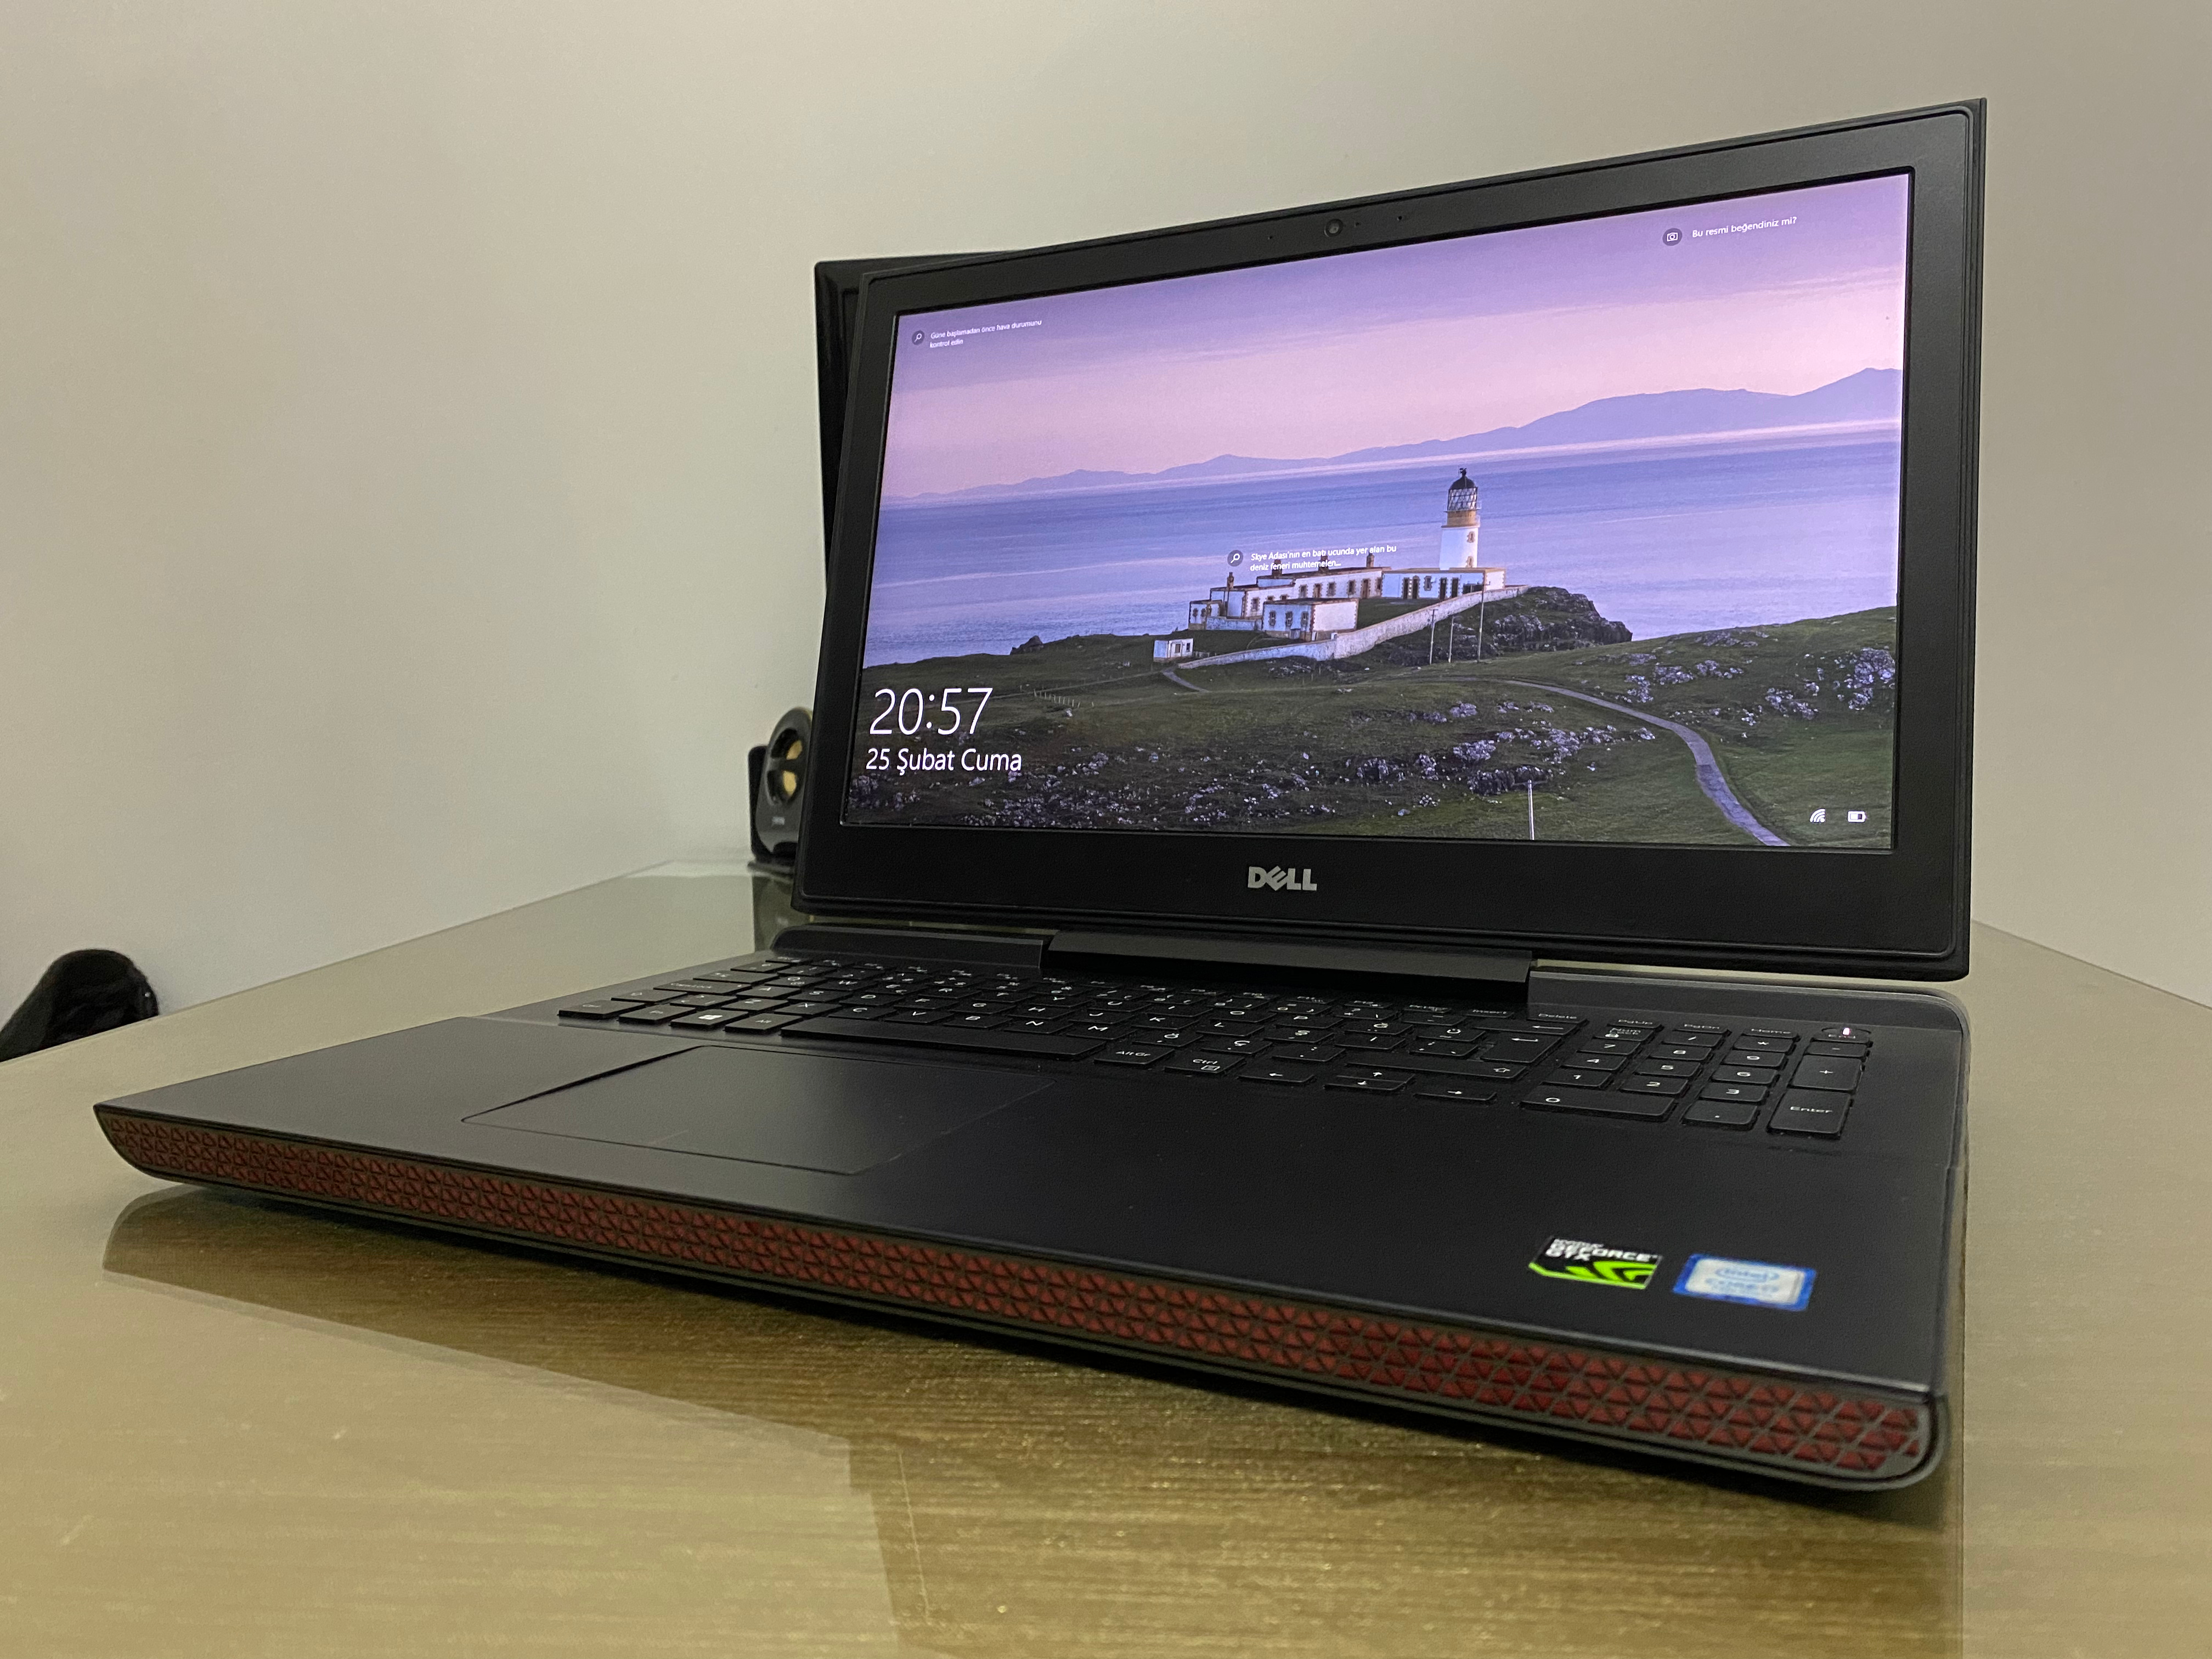 DELL 7567 i7 7700HQ GTX1050Ti 16 RAM Gaming Laptop | DonanımHaber Forum